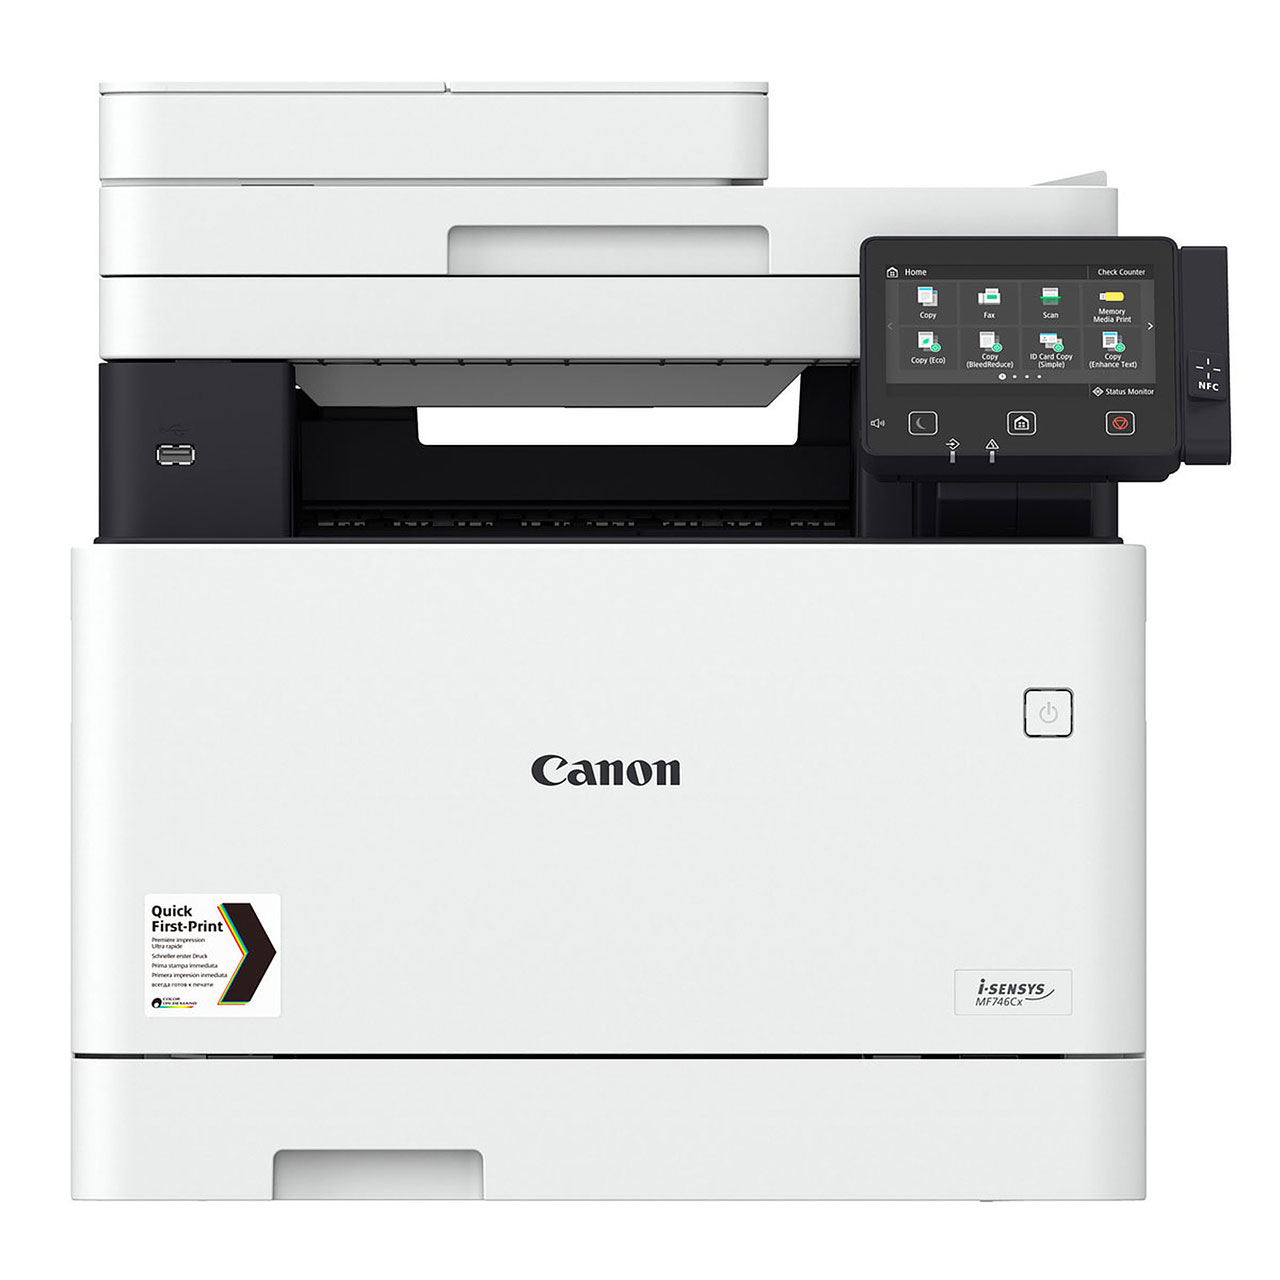 Toner cartridge compatible with Canon i-SENSYS MF746Cx